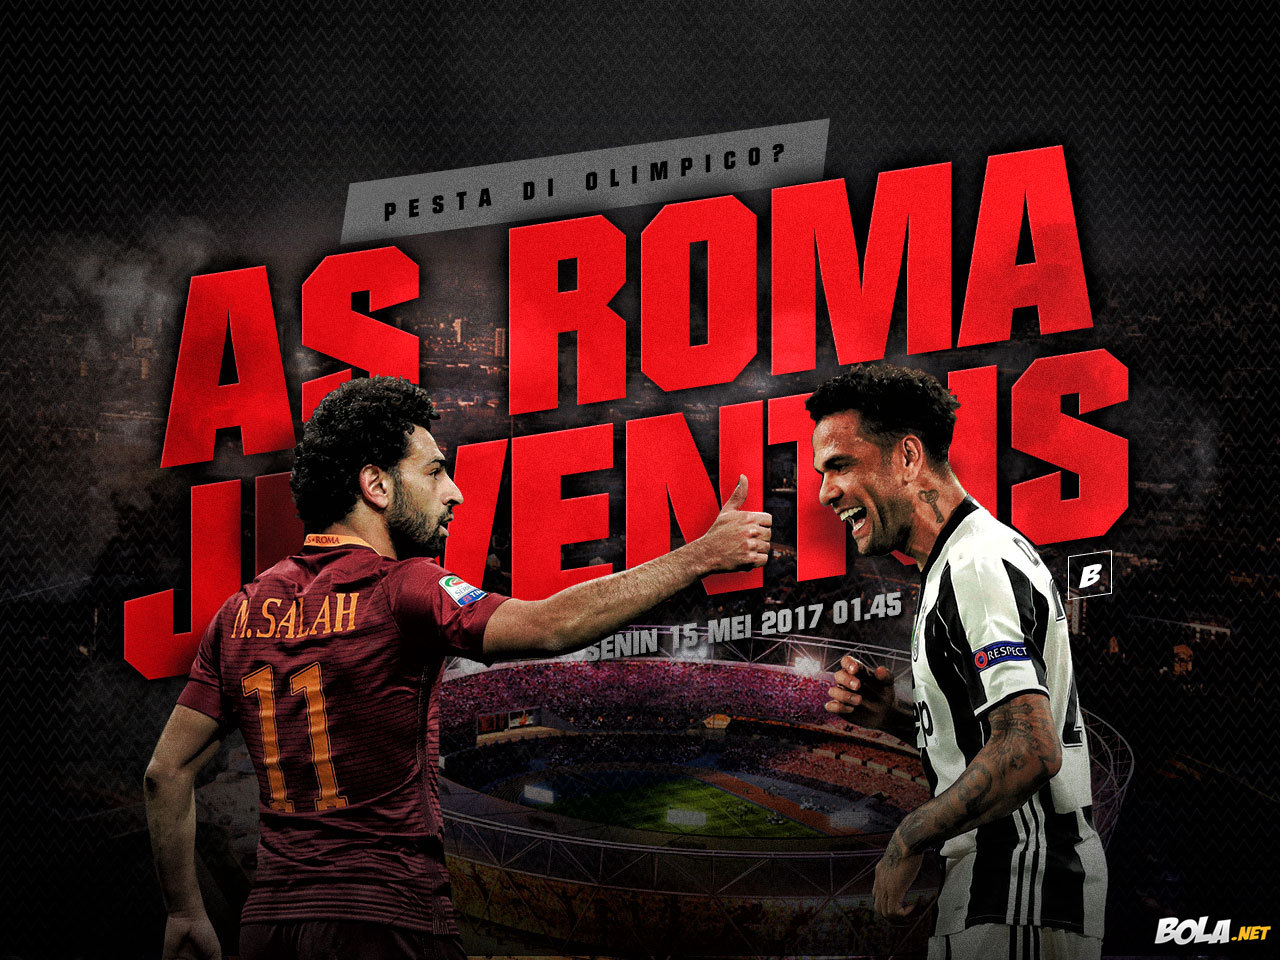 Deskripsi : Wallpaper As Roma Vs Juventus, size: 1280x960